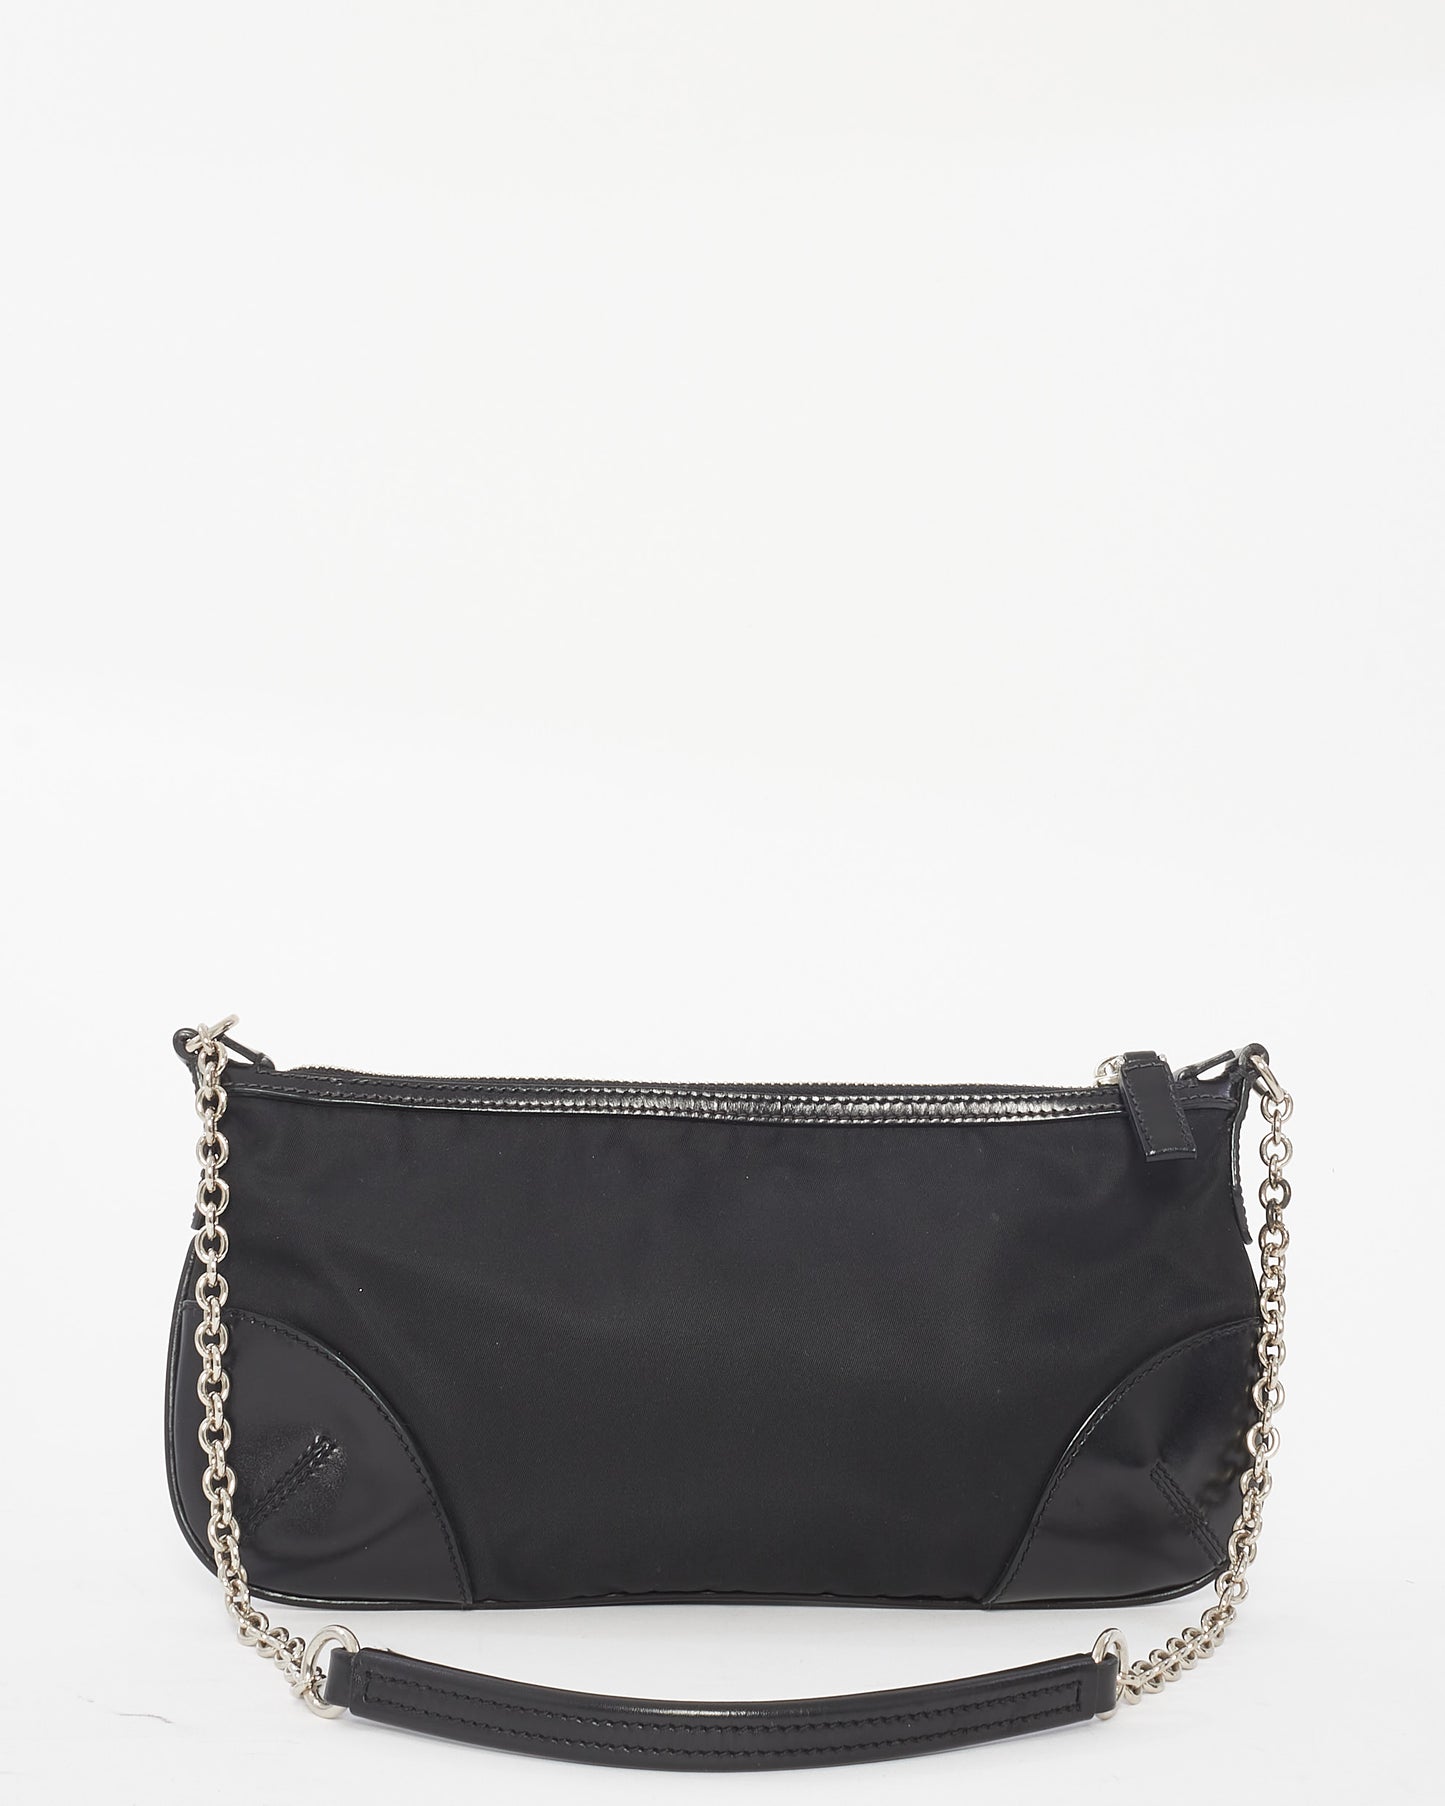 Prada Black Nylon & Leather Chain Mini Shoulder Bag